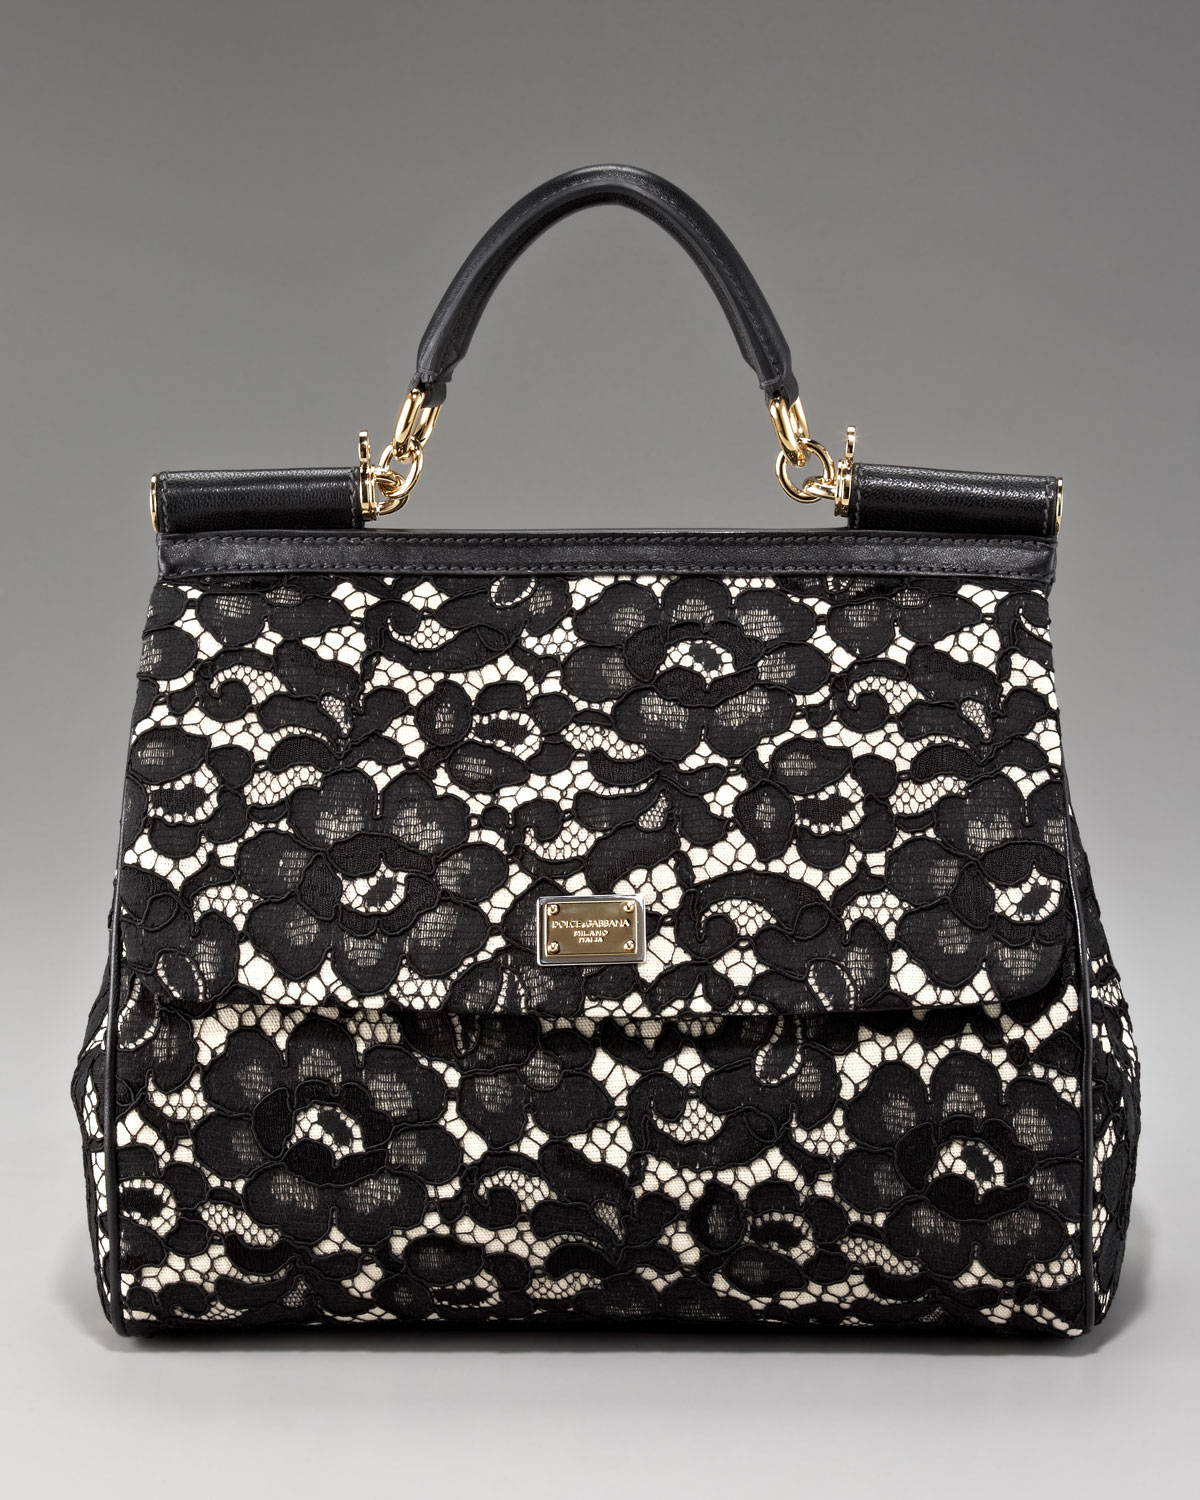 Lyst - Dolce & Gabbana Miss Sicily Lace Handbag in Black